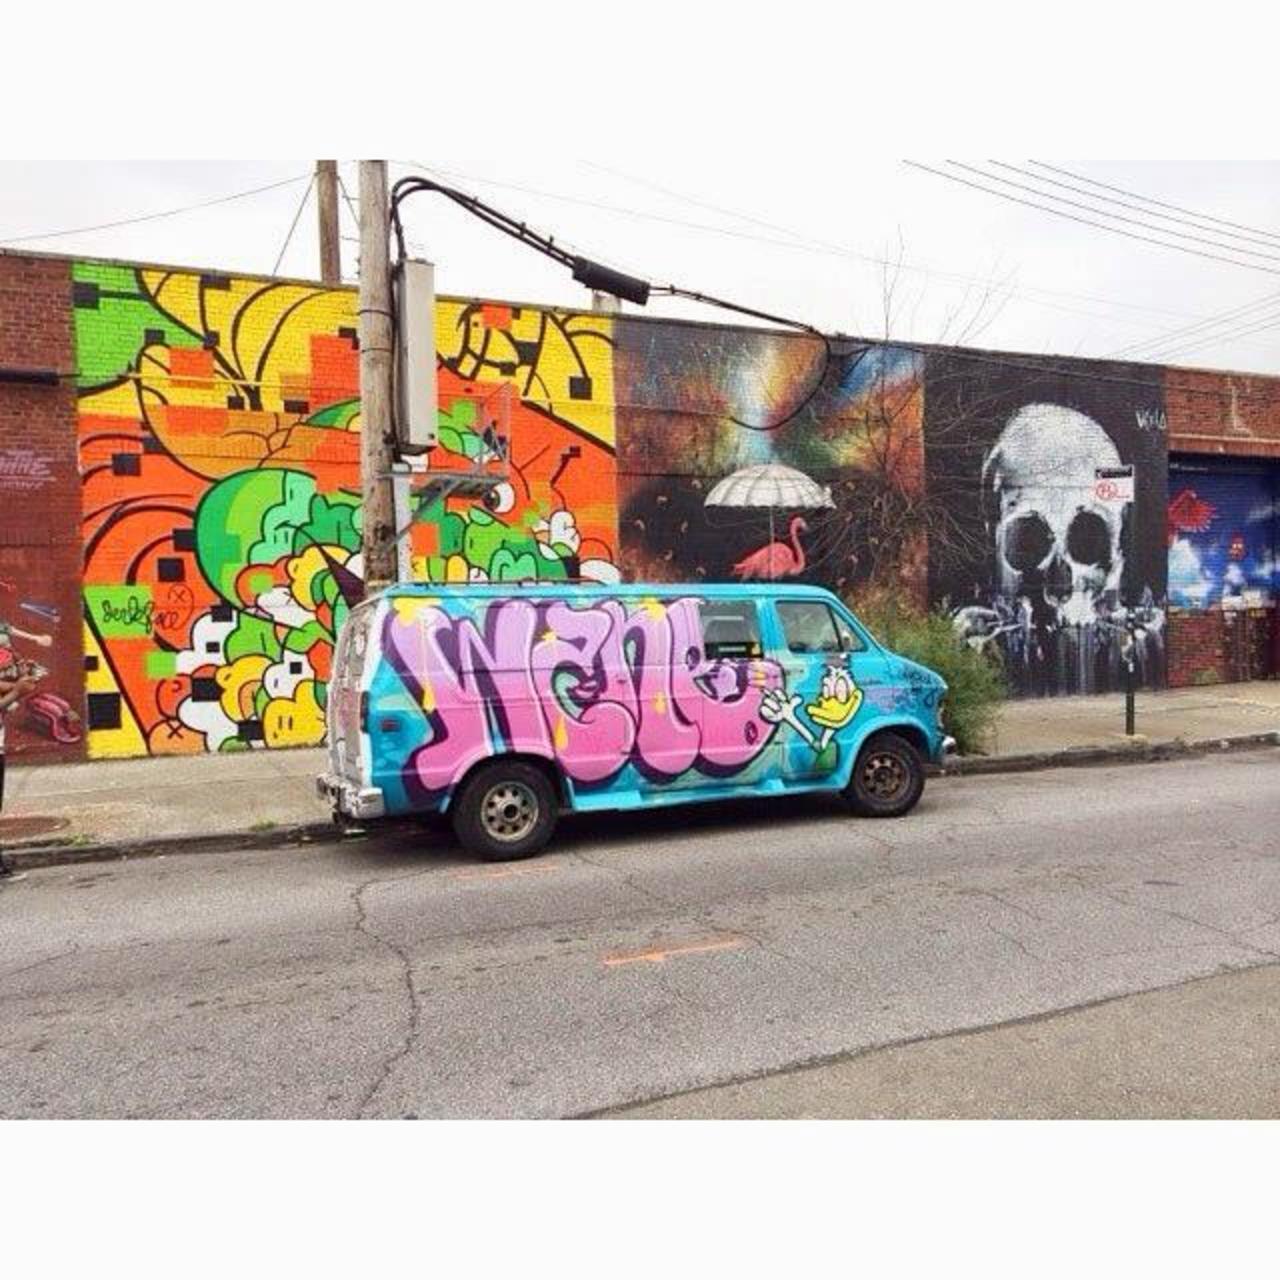 I saw this van in #brooklyn . Does anyone know of the #artist ? #streetart #graffiti http://t.co/4s7Rwt6yAA